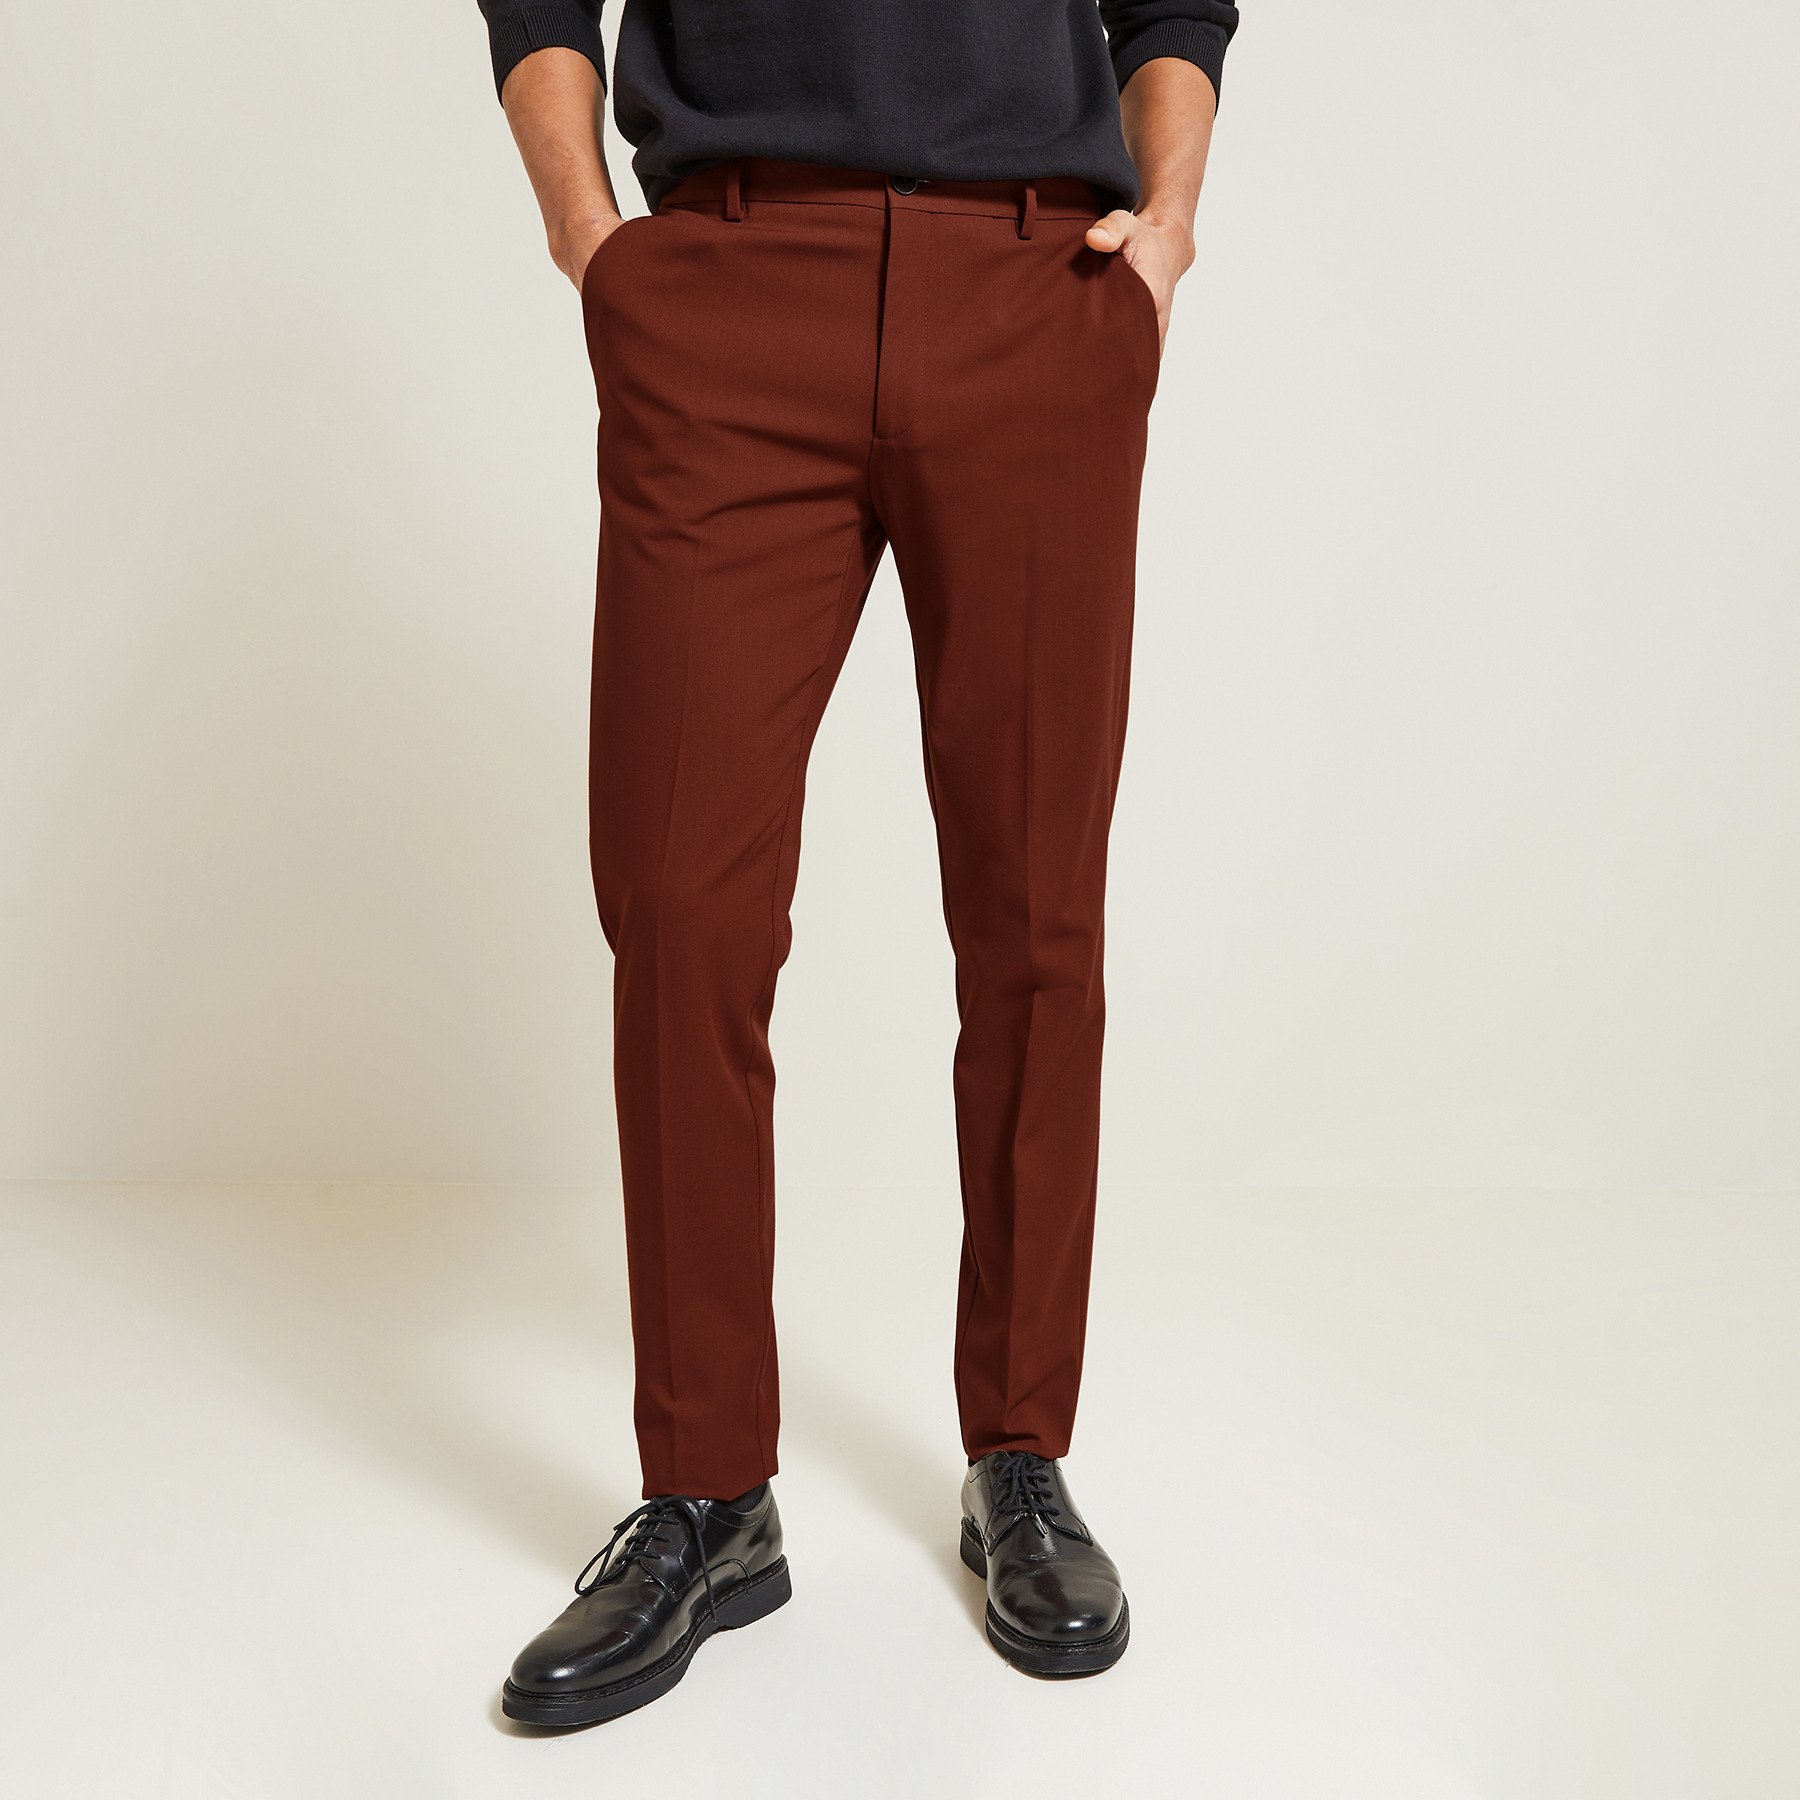 Pantalon de costume extra slim bi-stretch Rouge 36 66% Polyester, 28% Viscose, 6% Elasthanne Homme Brice